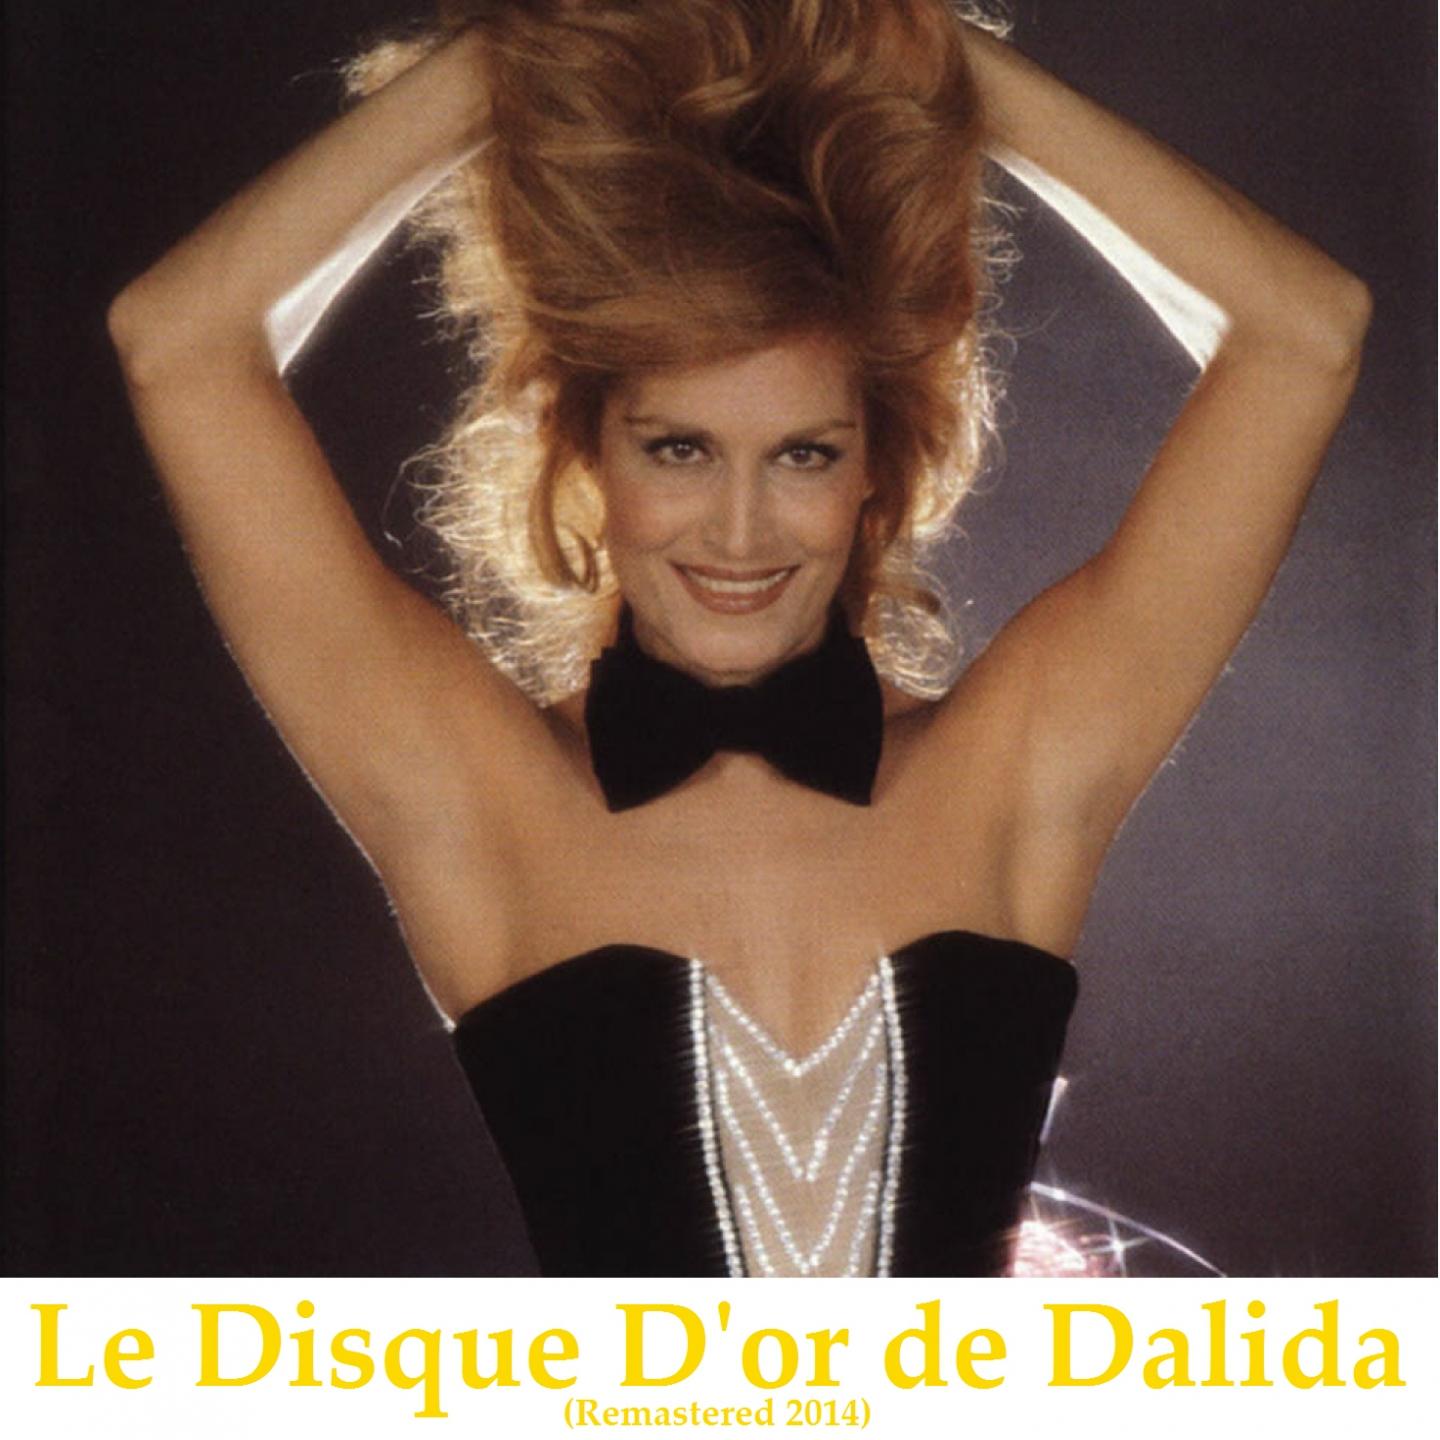 Le disque d'or de Dalida专辑